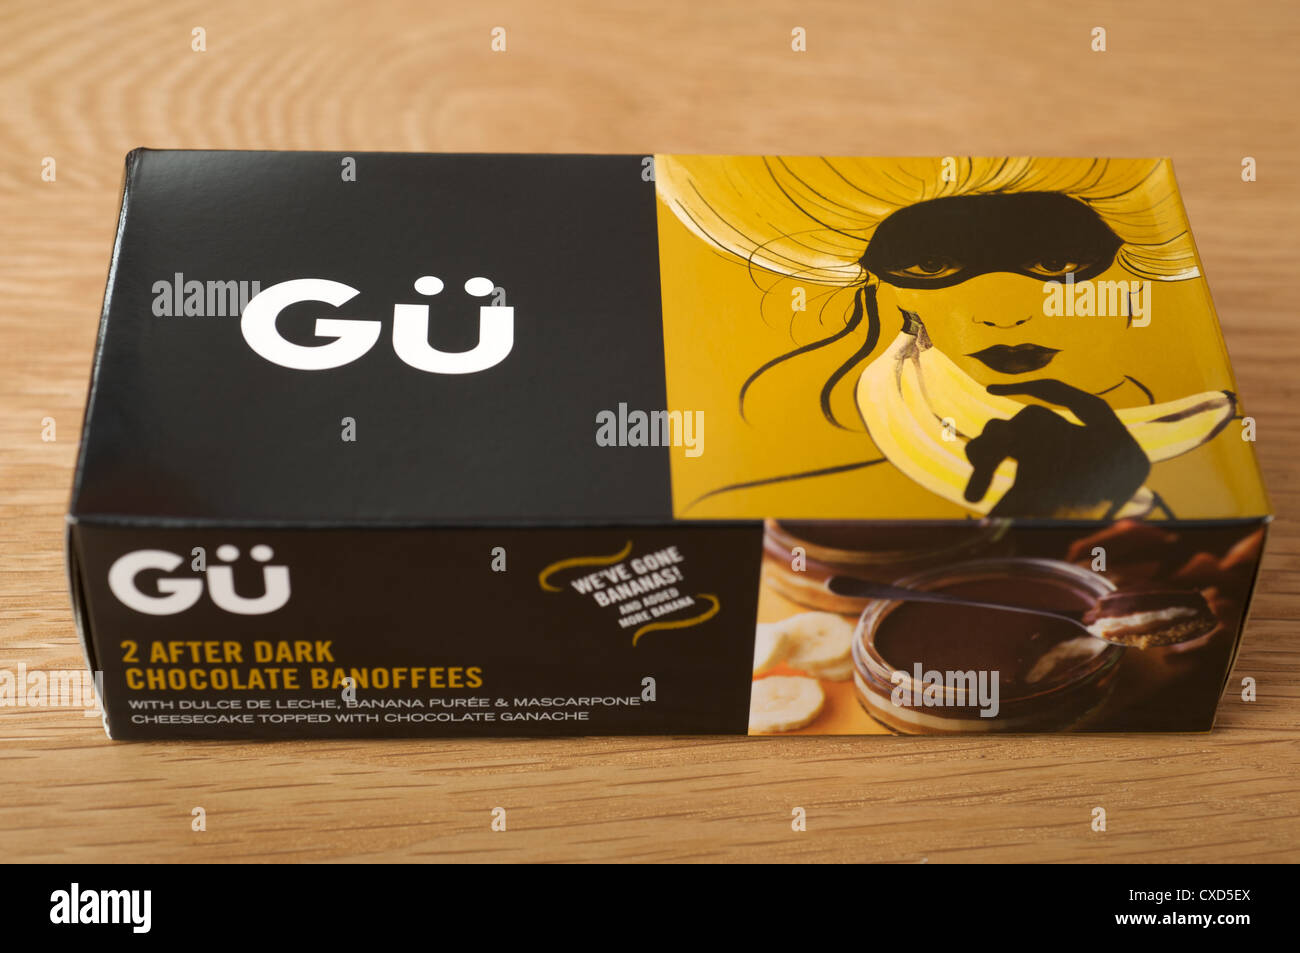 GU After dark chocolate Banoffees Stock Photo